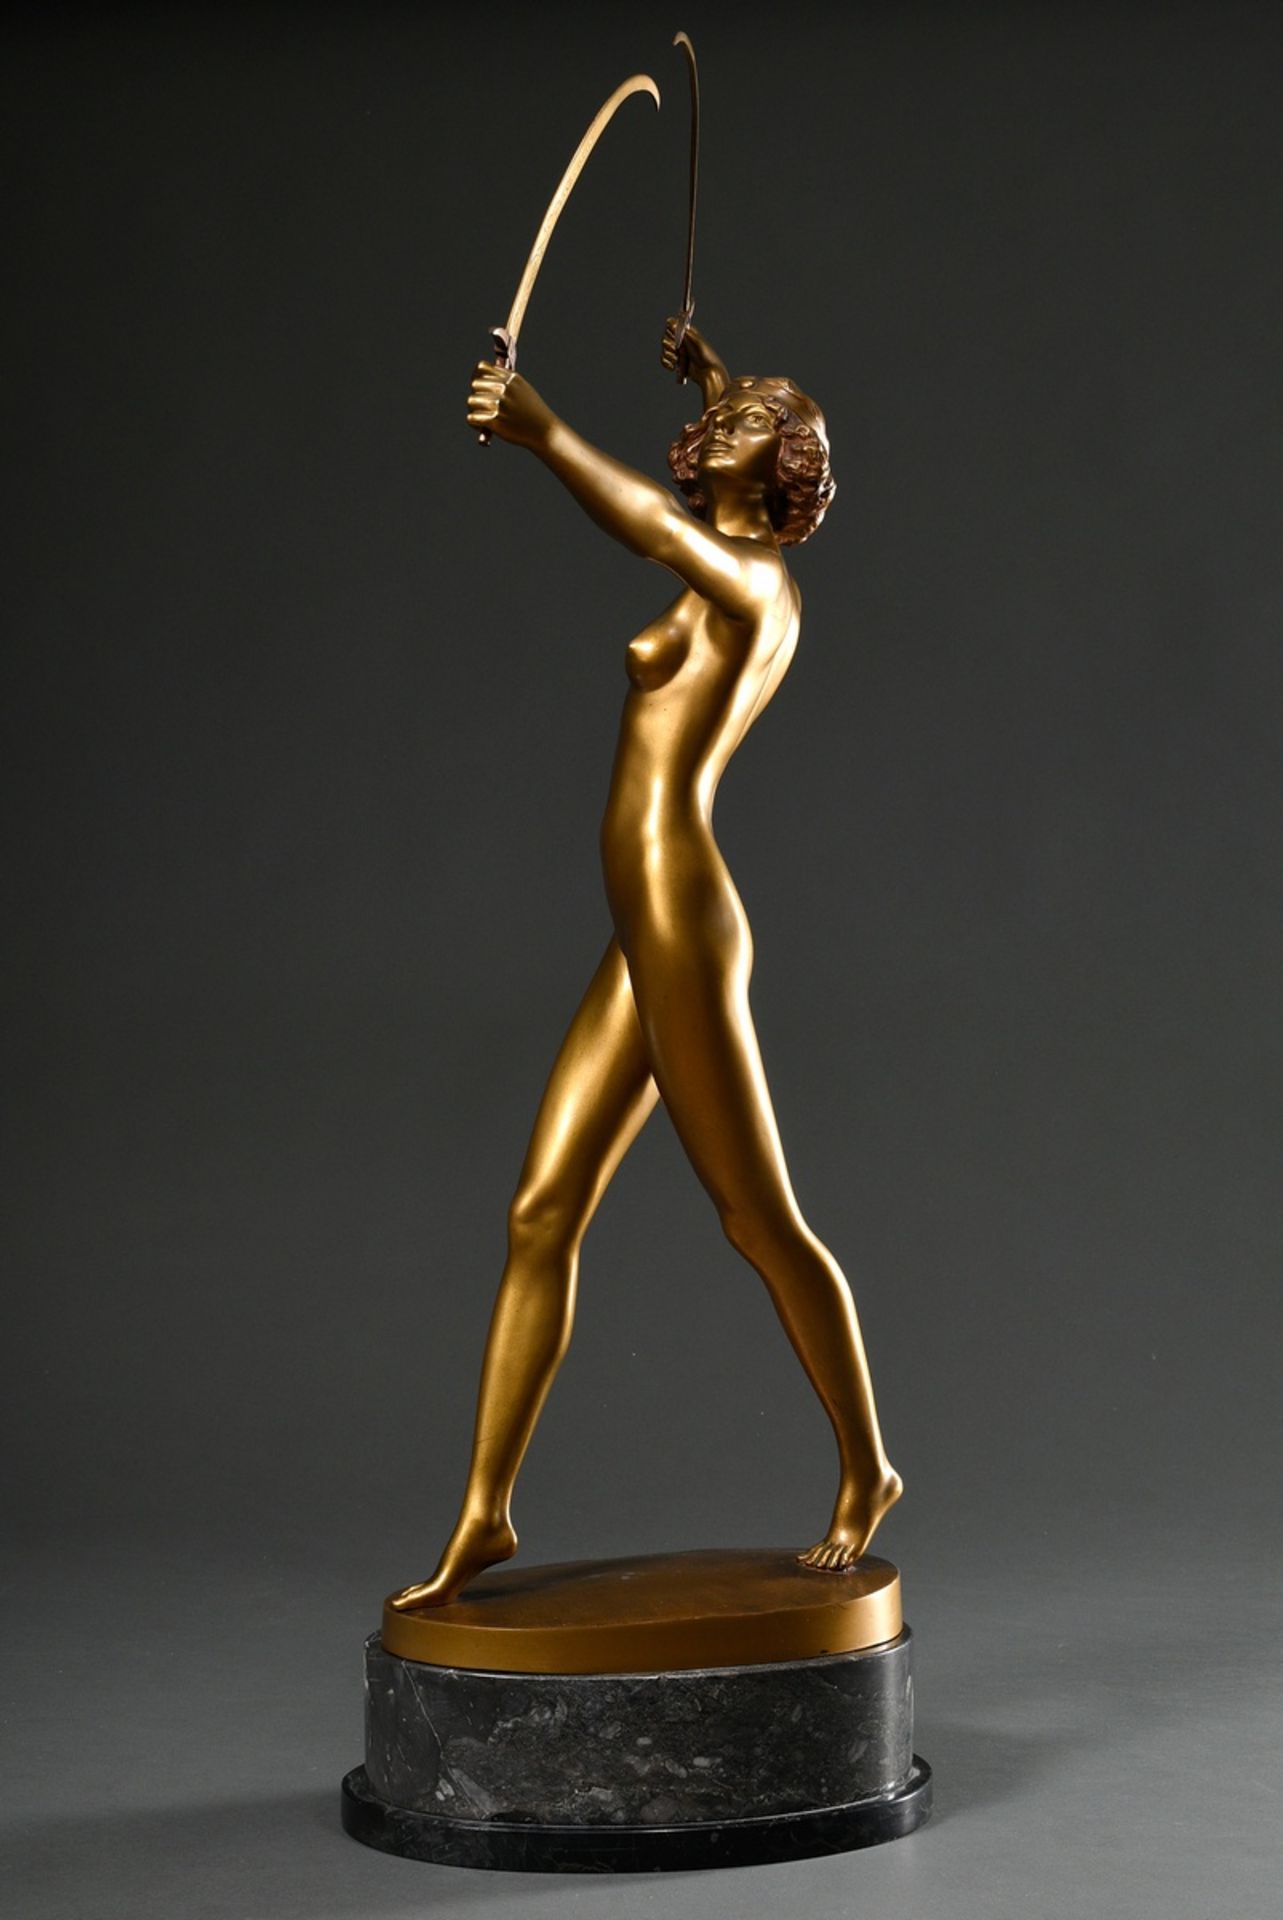 Jaeger, Gotthilf (1871-1933) "Sabre Dancer", around 1925, bronze with gold patina on grey marble pl - Image 8 of 10